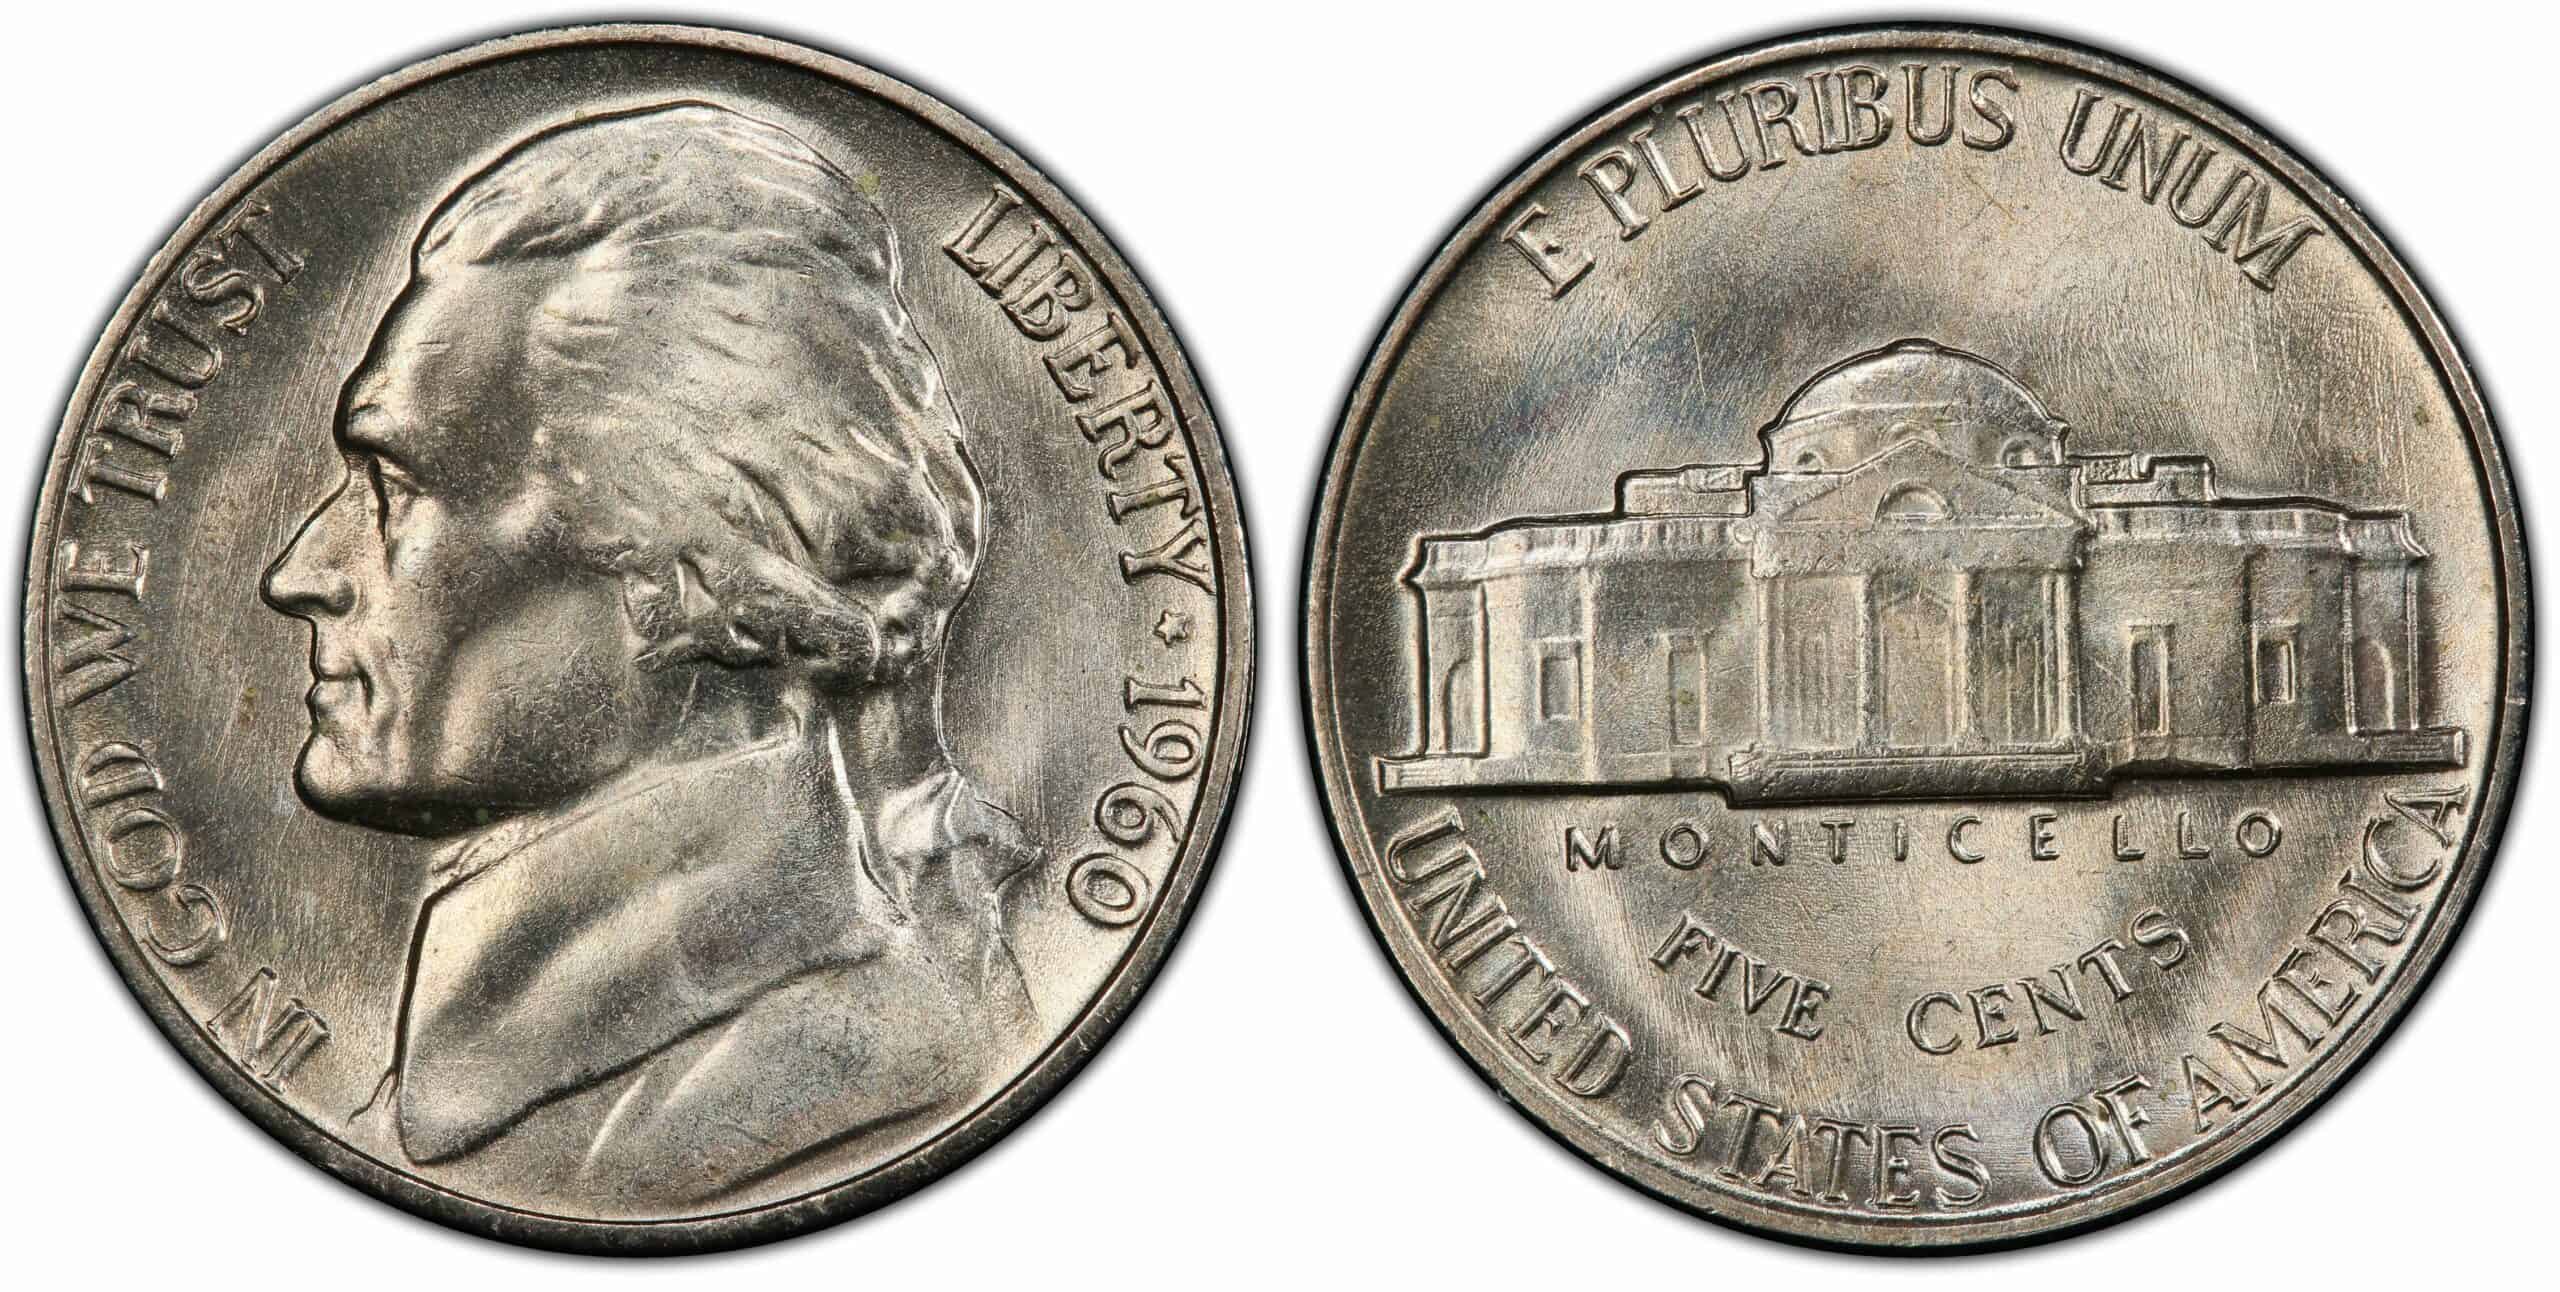 1960 P Jefferson Nickel